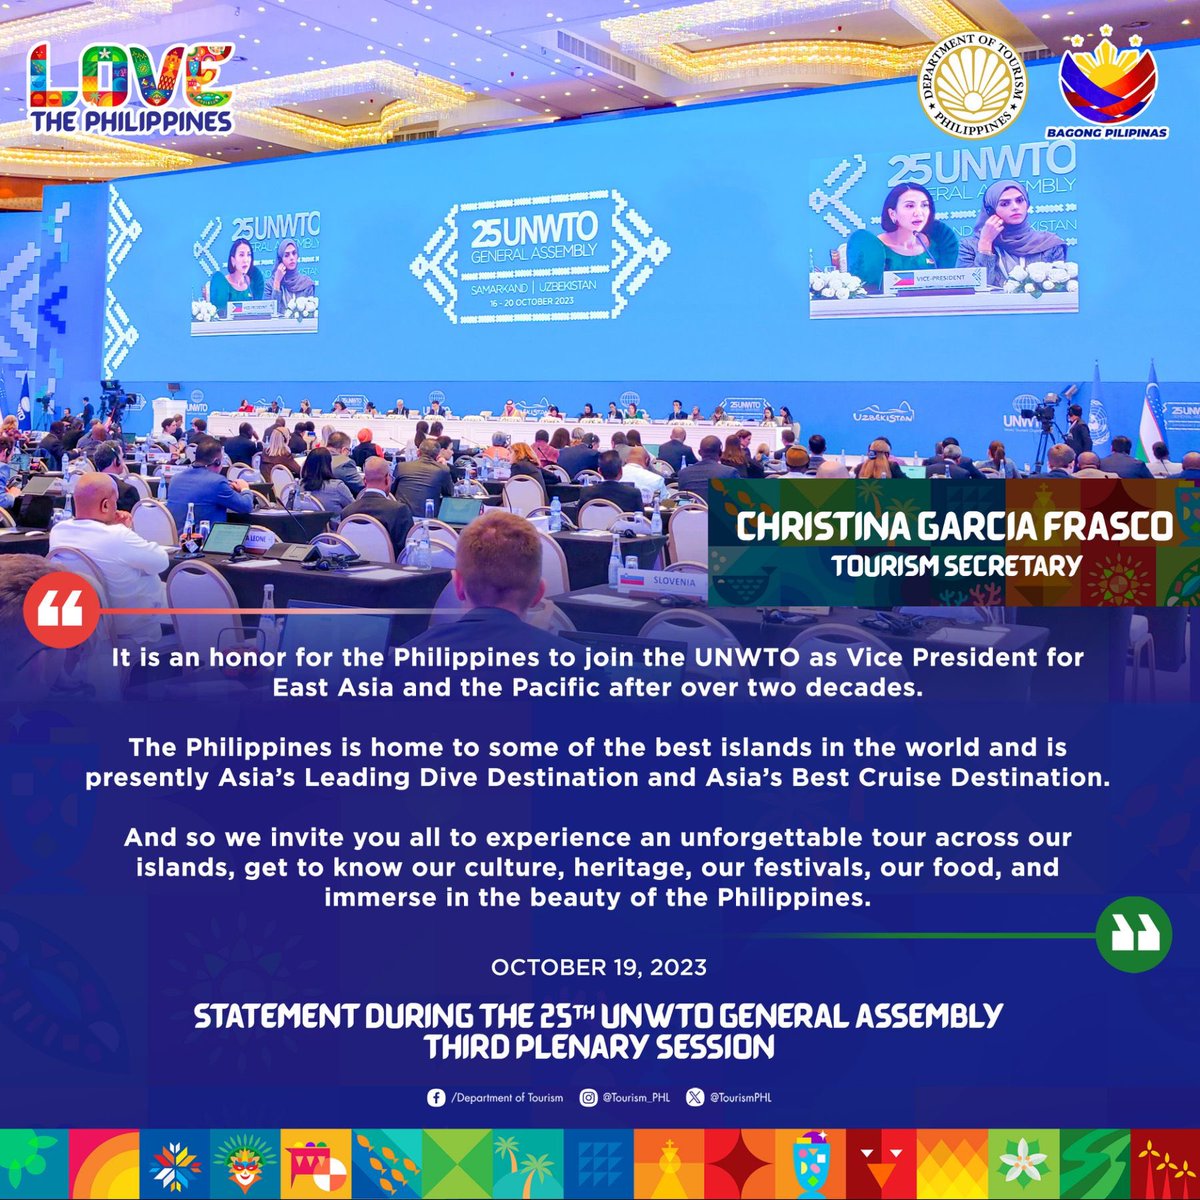 𝗦𝗧𝗔𝗧𝗘𝗠𝗘𝗡𝗧 𝗢𝗙 𝗦𝗘𝗖𝗥𝗘𝗧𝗔𝗥𝗬 𝗖𝗛𝗥𝗜𝗦𝗧𝗜𝗡𝗔 𝗚𝗔𝗥𝗖𝗜𝗔 𝗙𝗥𝗔𝗦𝗖𝗢 𝗗𝗨𝗥𝗜𝗡𝗚 𝗧𝗛𝗘 𝟮𝟱𝗧𝗛 𝗨𝗡𝗪𝗧𝗢 𝗚𝗘𝗡𝗘𝗥𝗔𝗟 𝗔𝗦𝗦𝗘𝗠𝗕𝗟𝗬 

#25UNWTOGA #LoveThePhilippines #BagongPilipinas #UNWTOGA